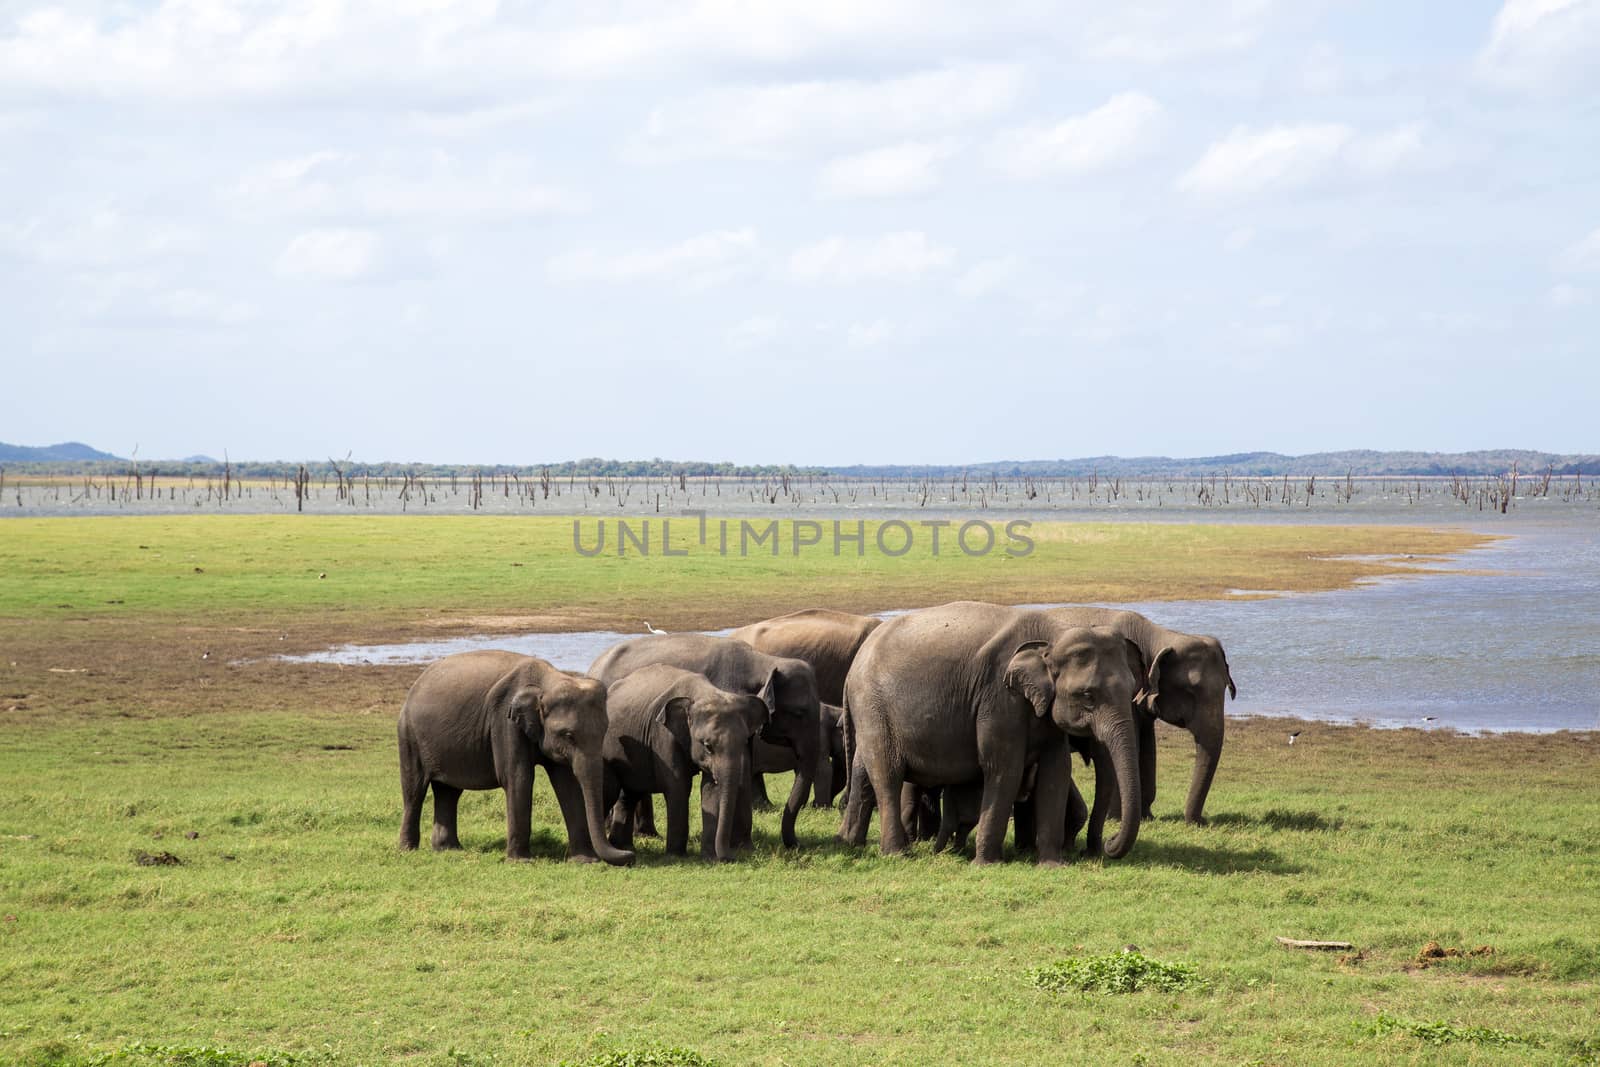 Herd of elephants in Kaudulla National Park, Sri Lanka by oliverfoerstner